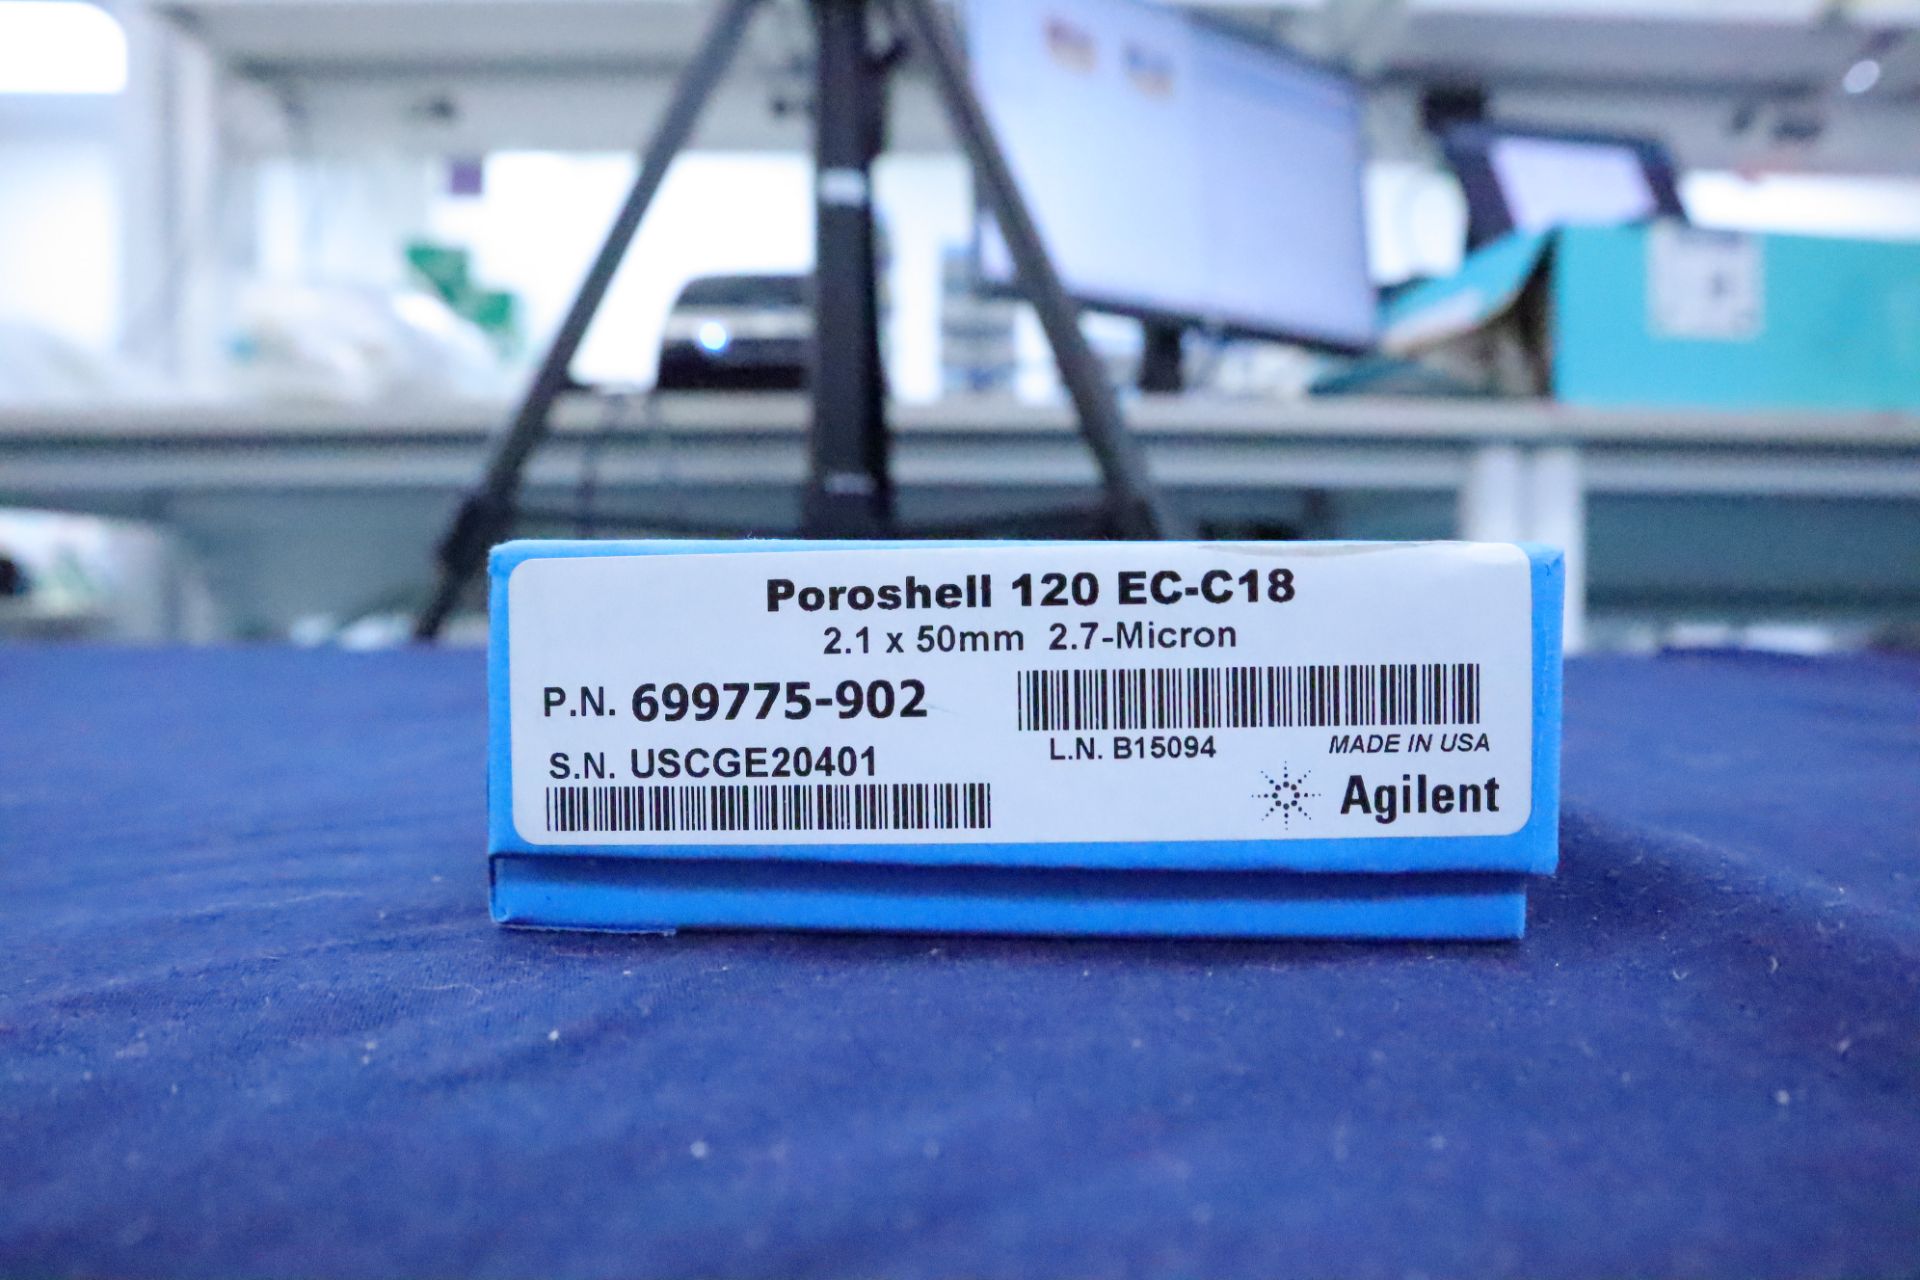 (OBN) InfinityLab for Agilent Poroshell 120 EC-C18 - 2.1 x 50mm 2.7-Micron (PN: 699775-902) - Image 2 of 4